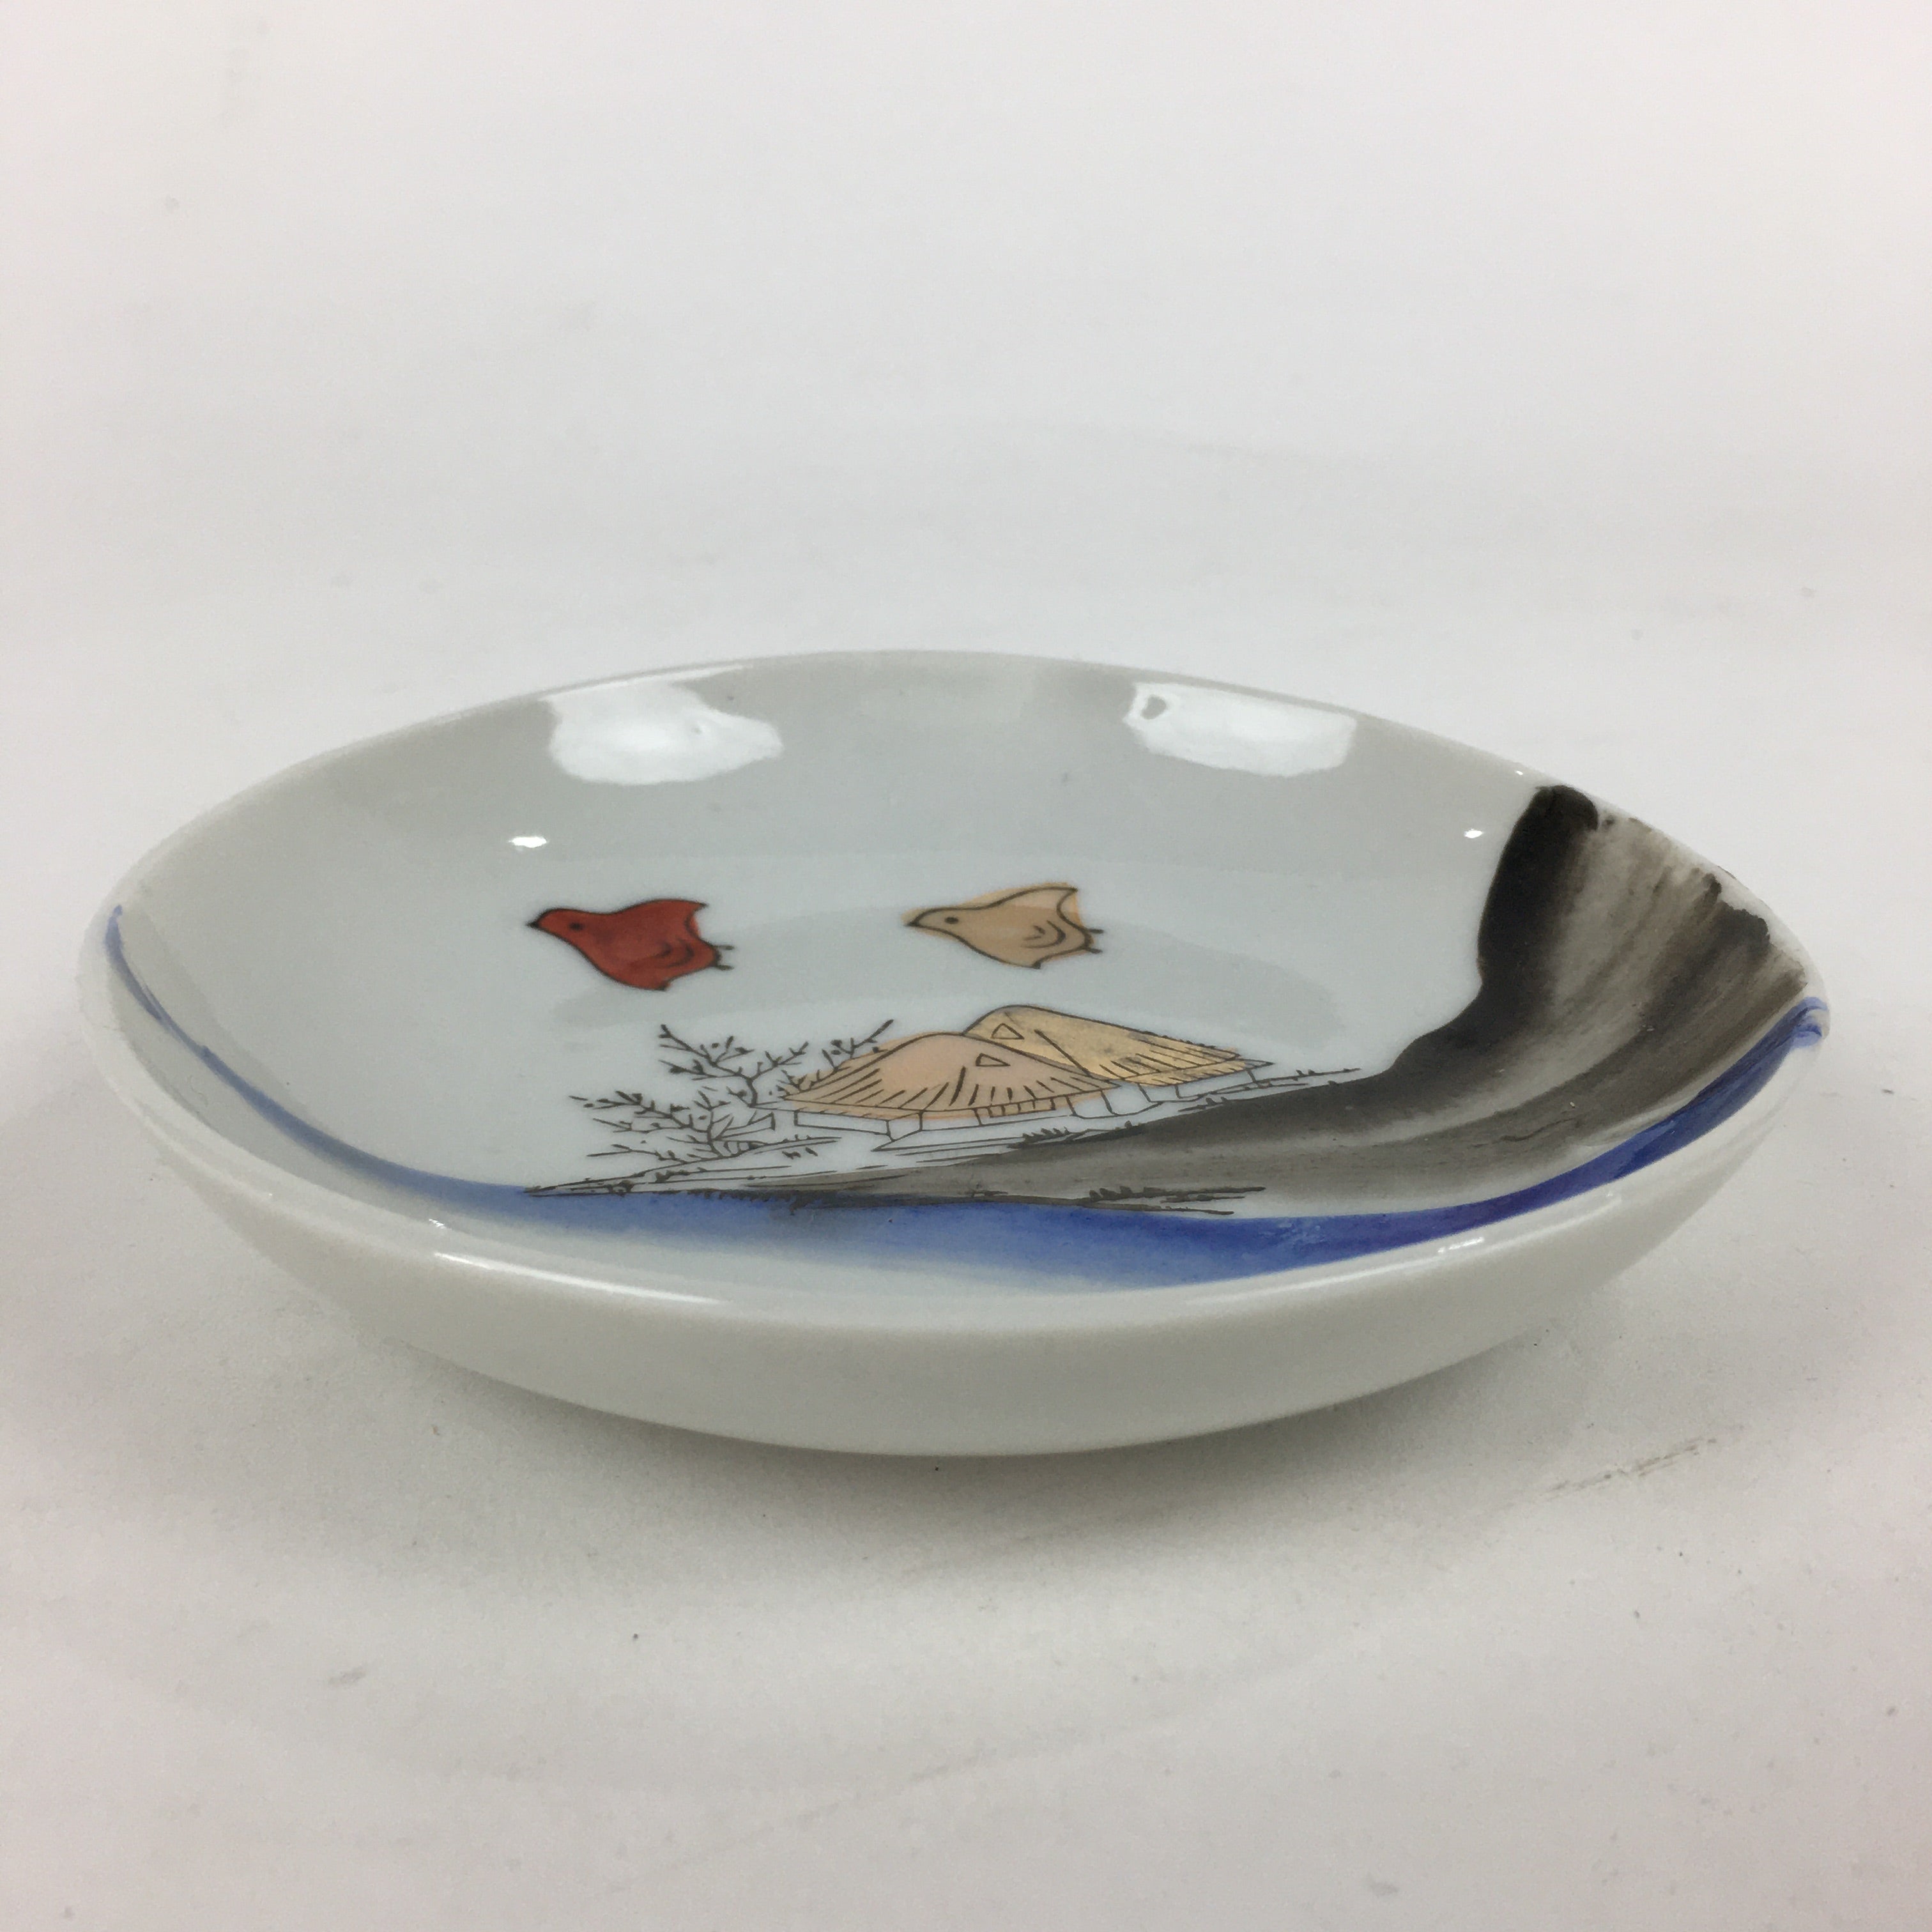 Japanese Porcelain Small Plate Vtg Pottery Countryside House Birds Kozara PP898